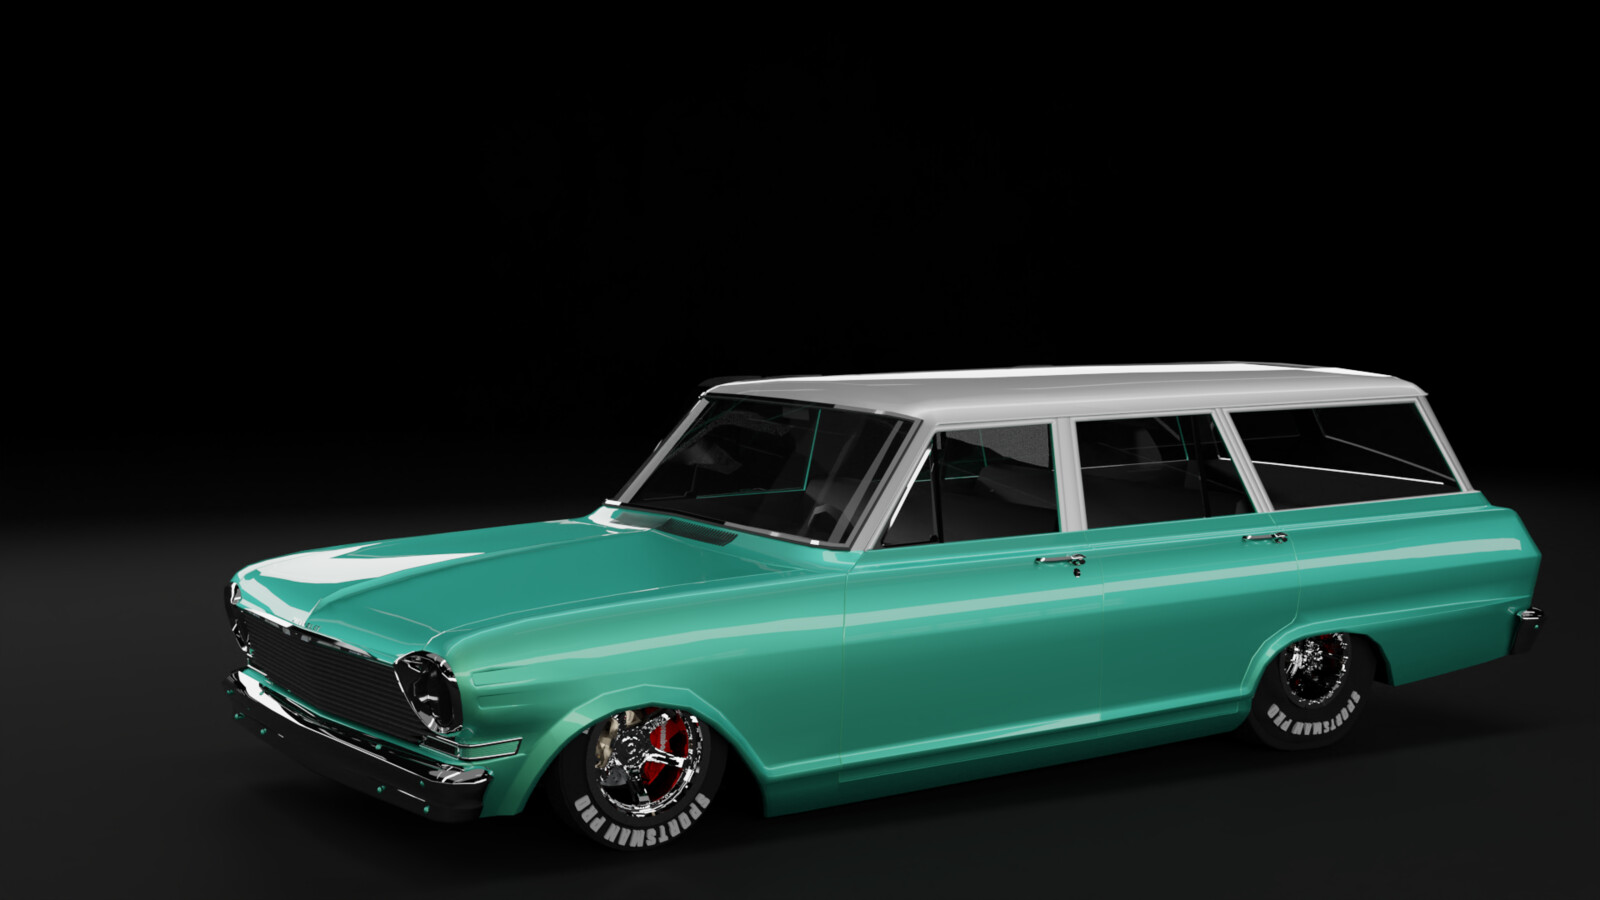 1964 Chevrolet Nova Wagon - Pro Street